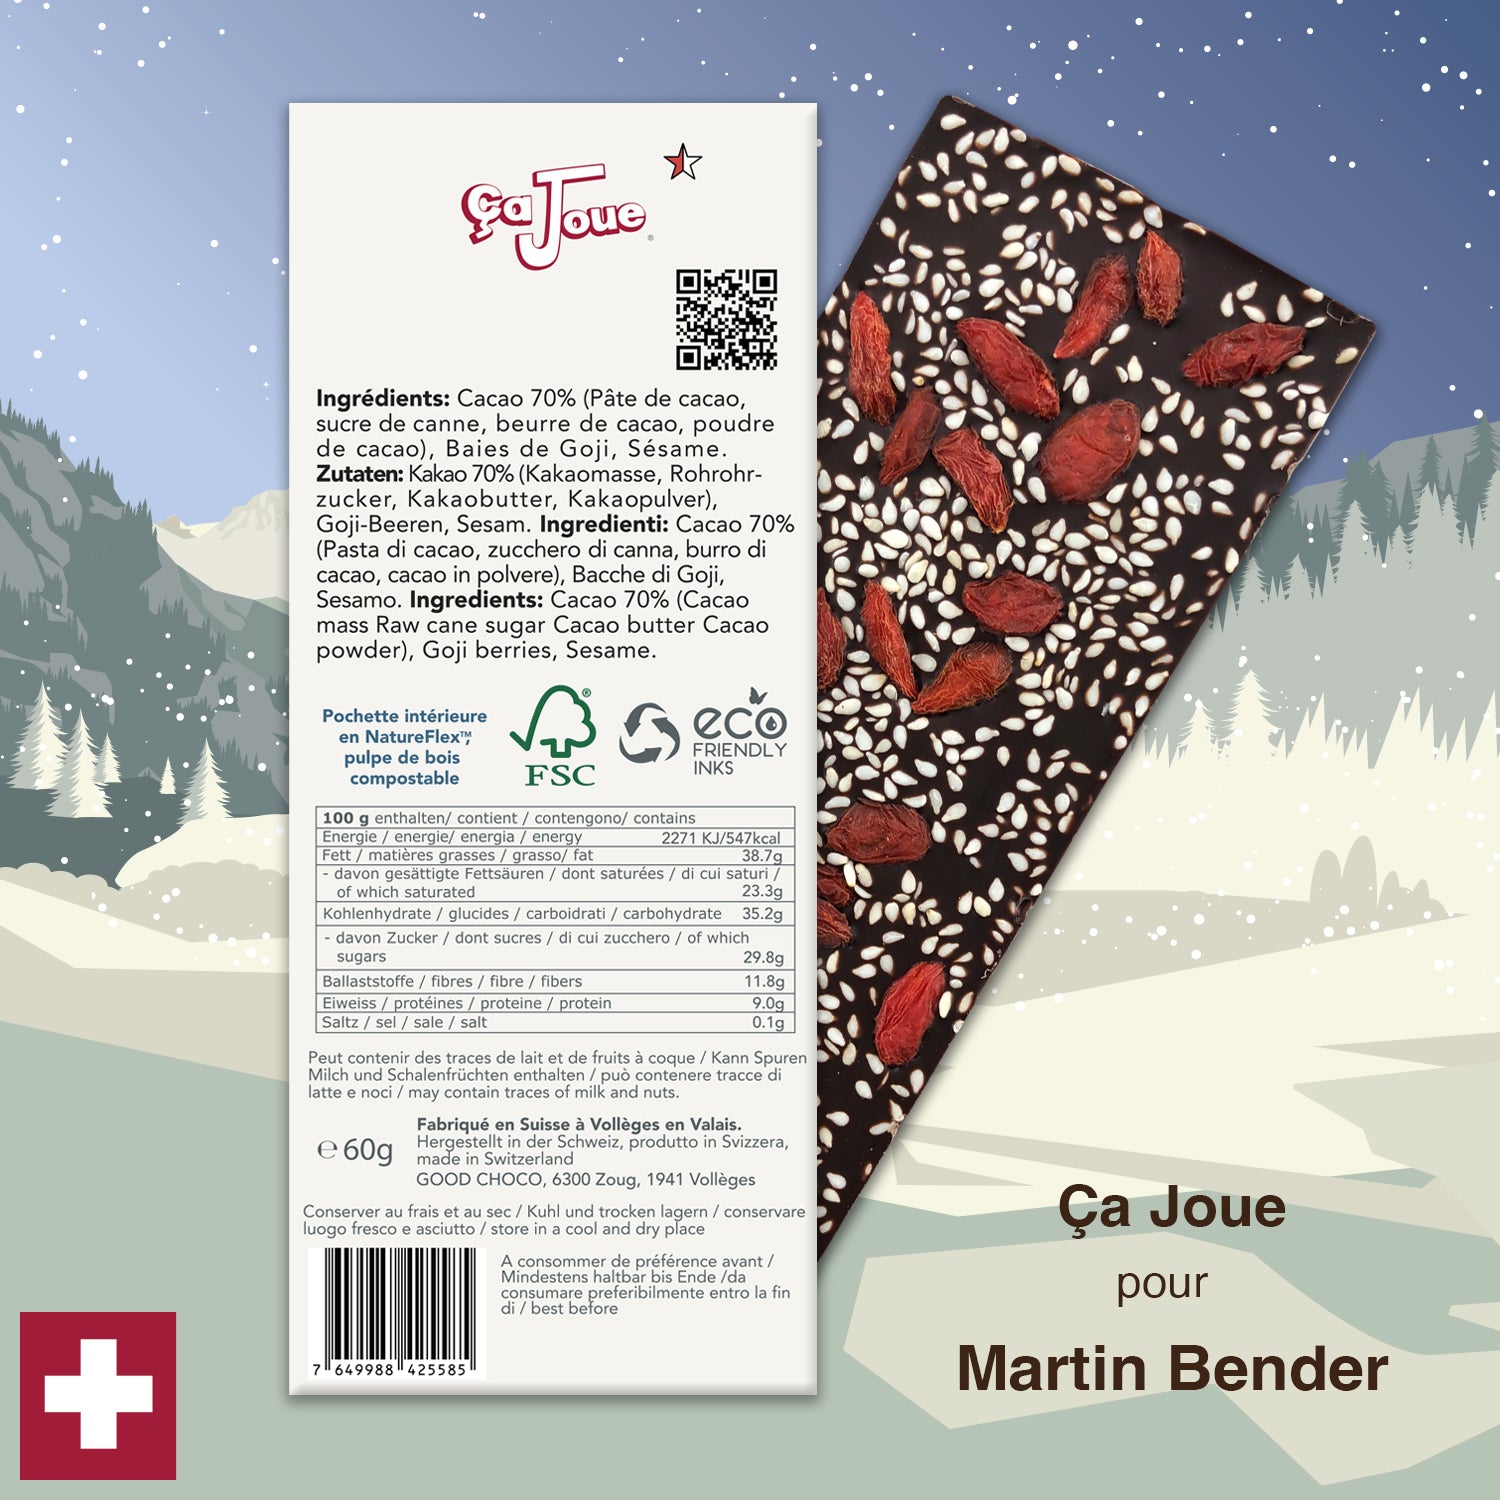 Ça Joue for Martin Bender (Ref-BN4) Chocolate from Val de Bagnes